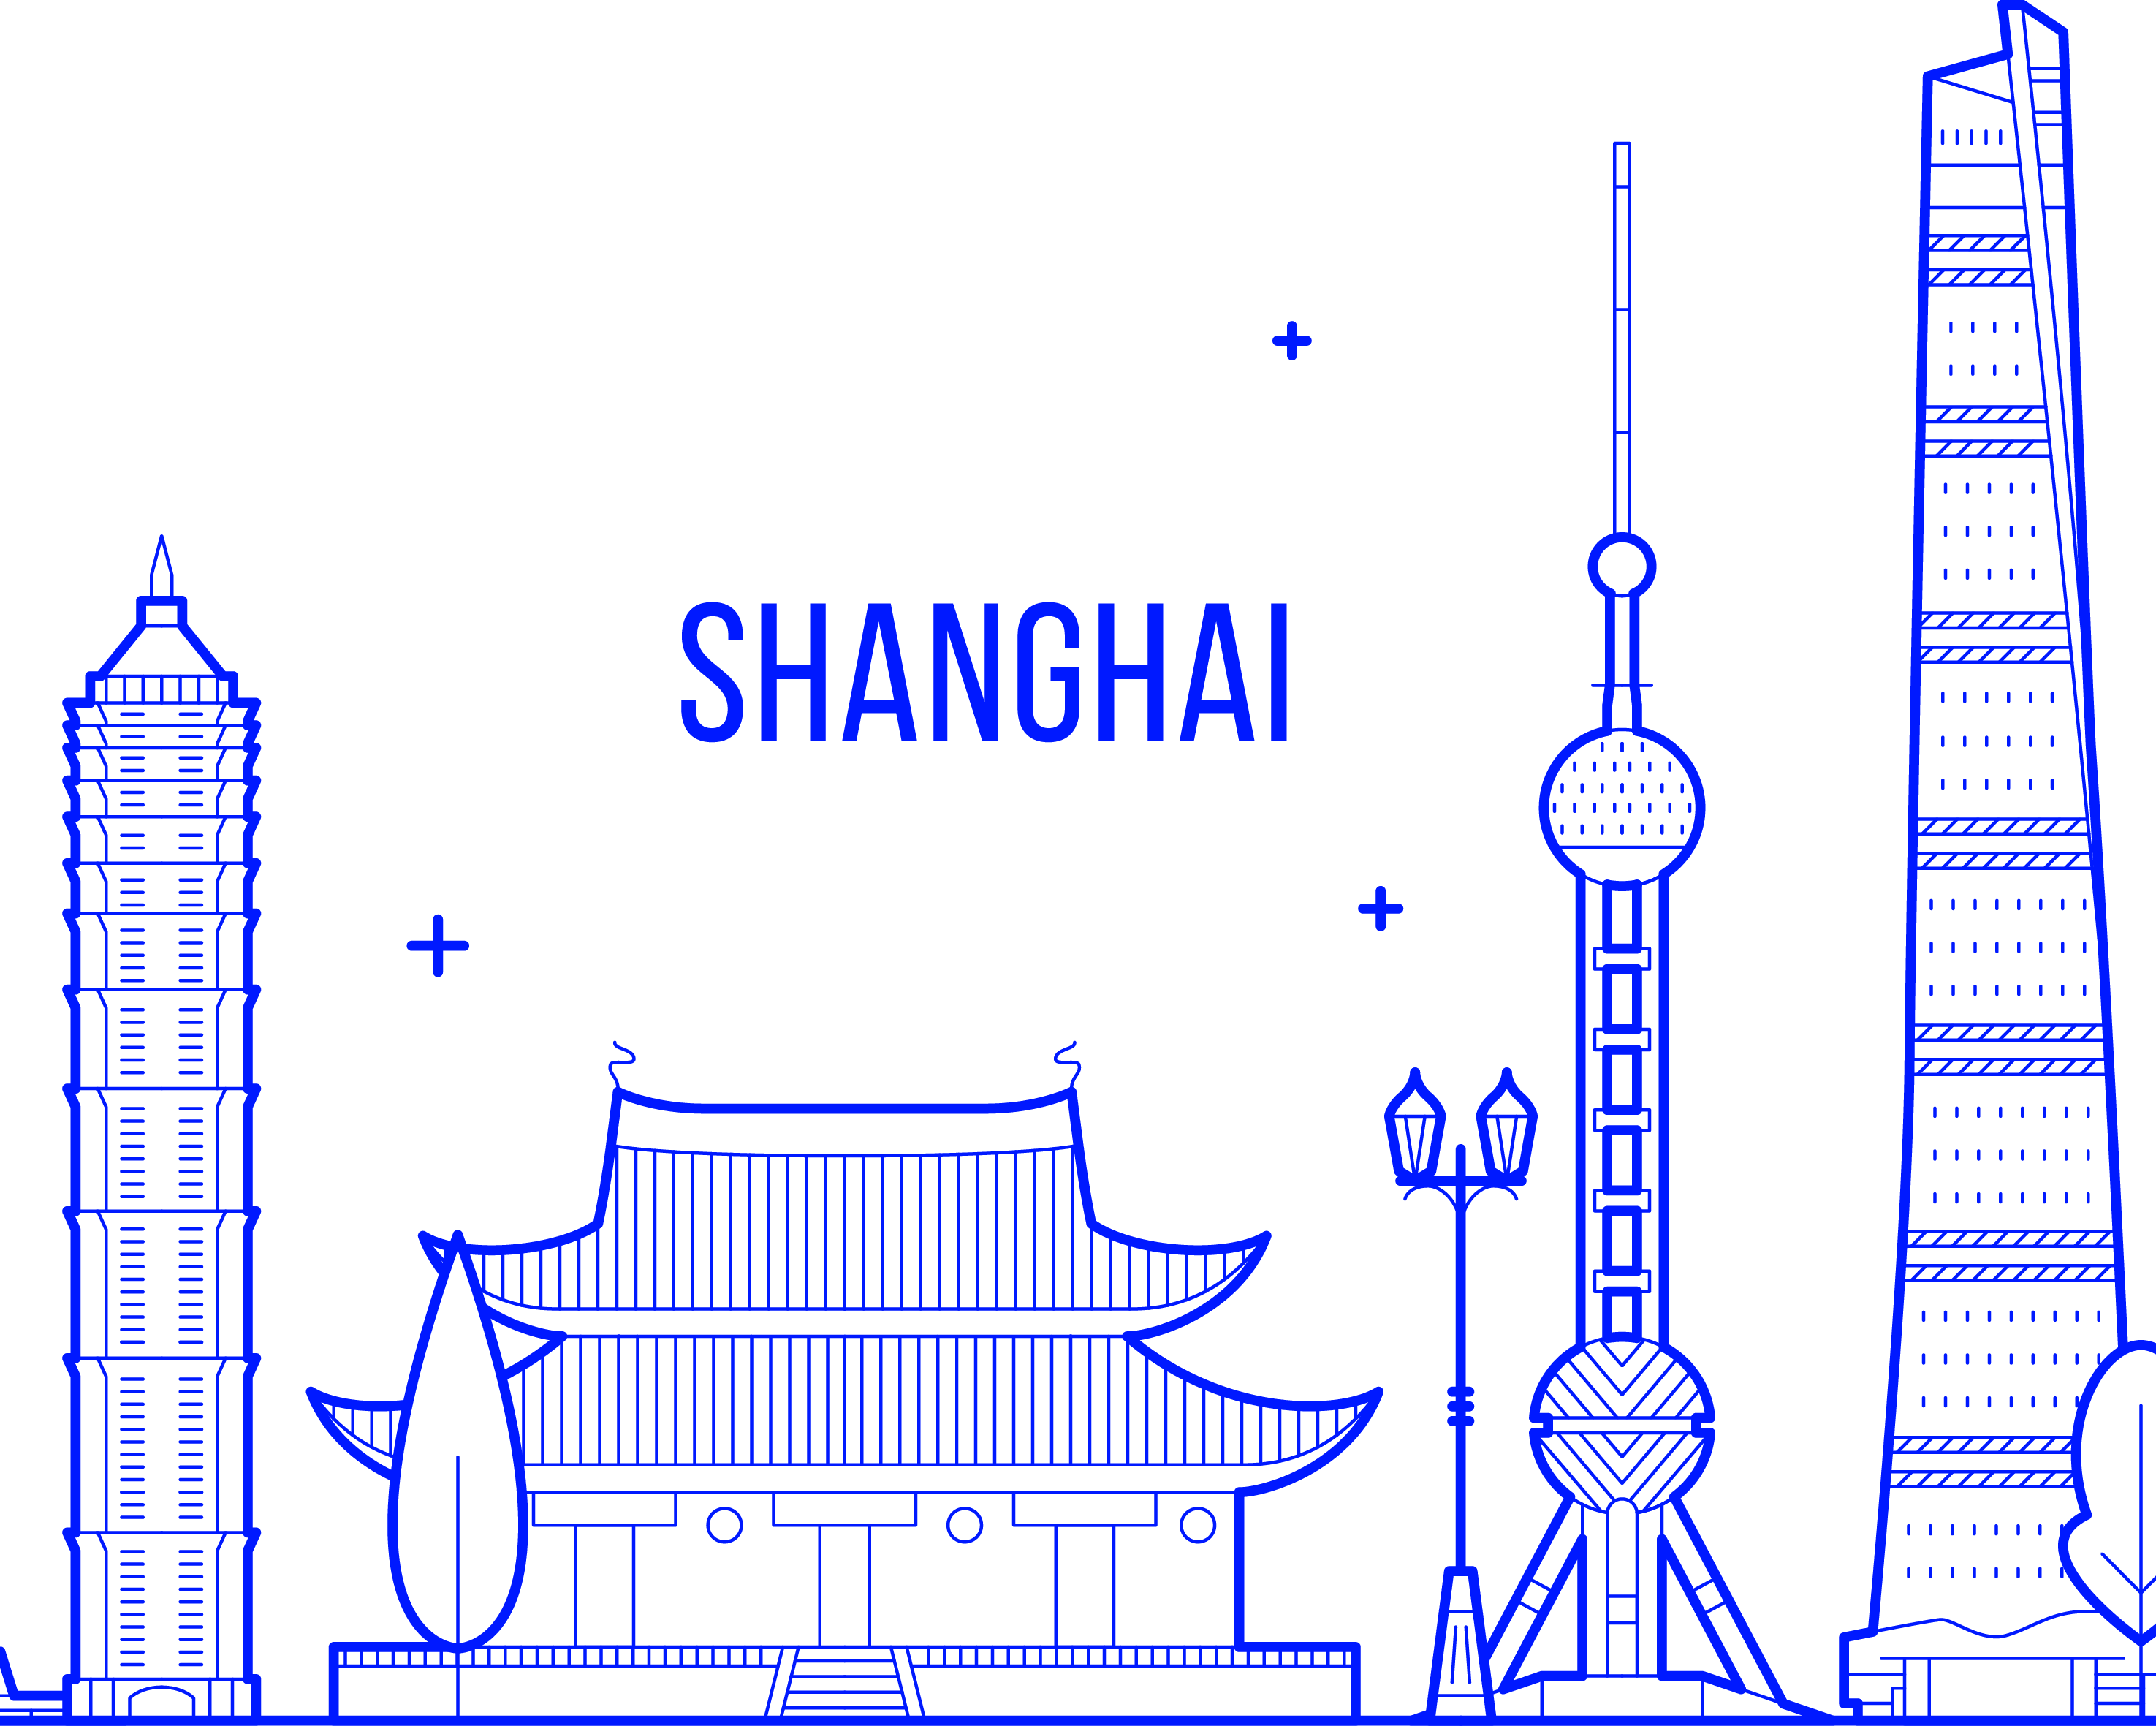 Shanghai skyline illustration